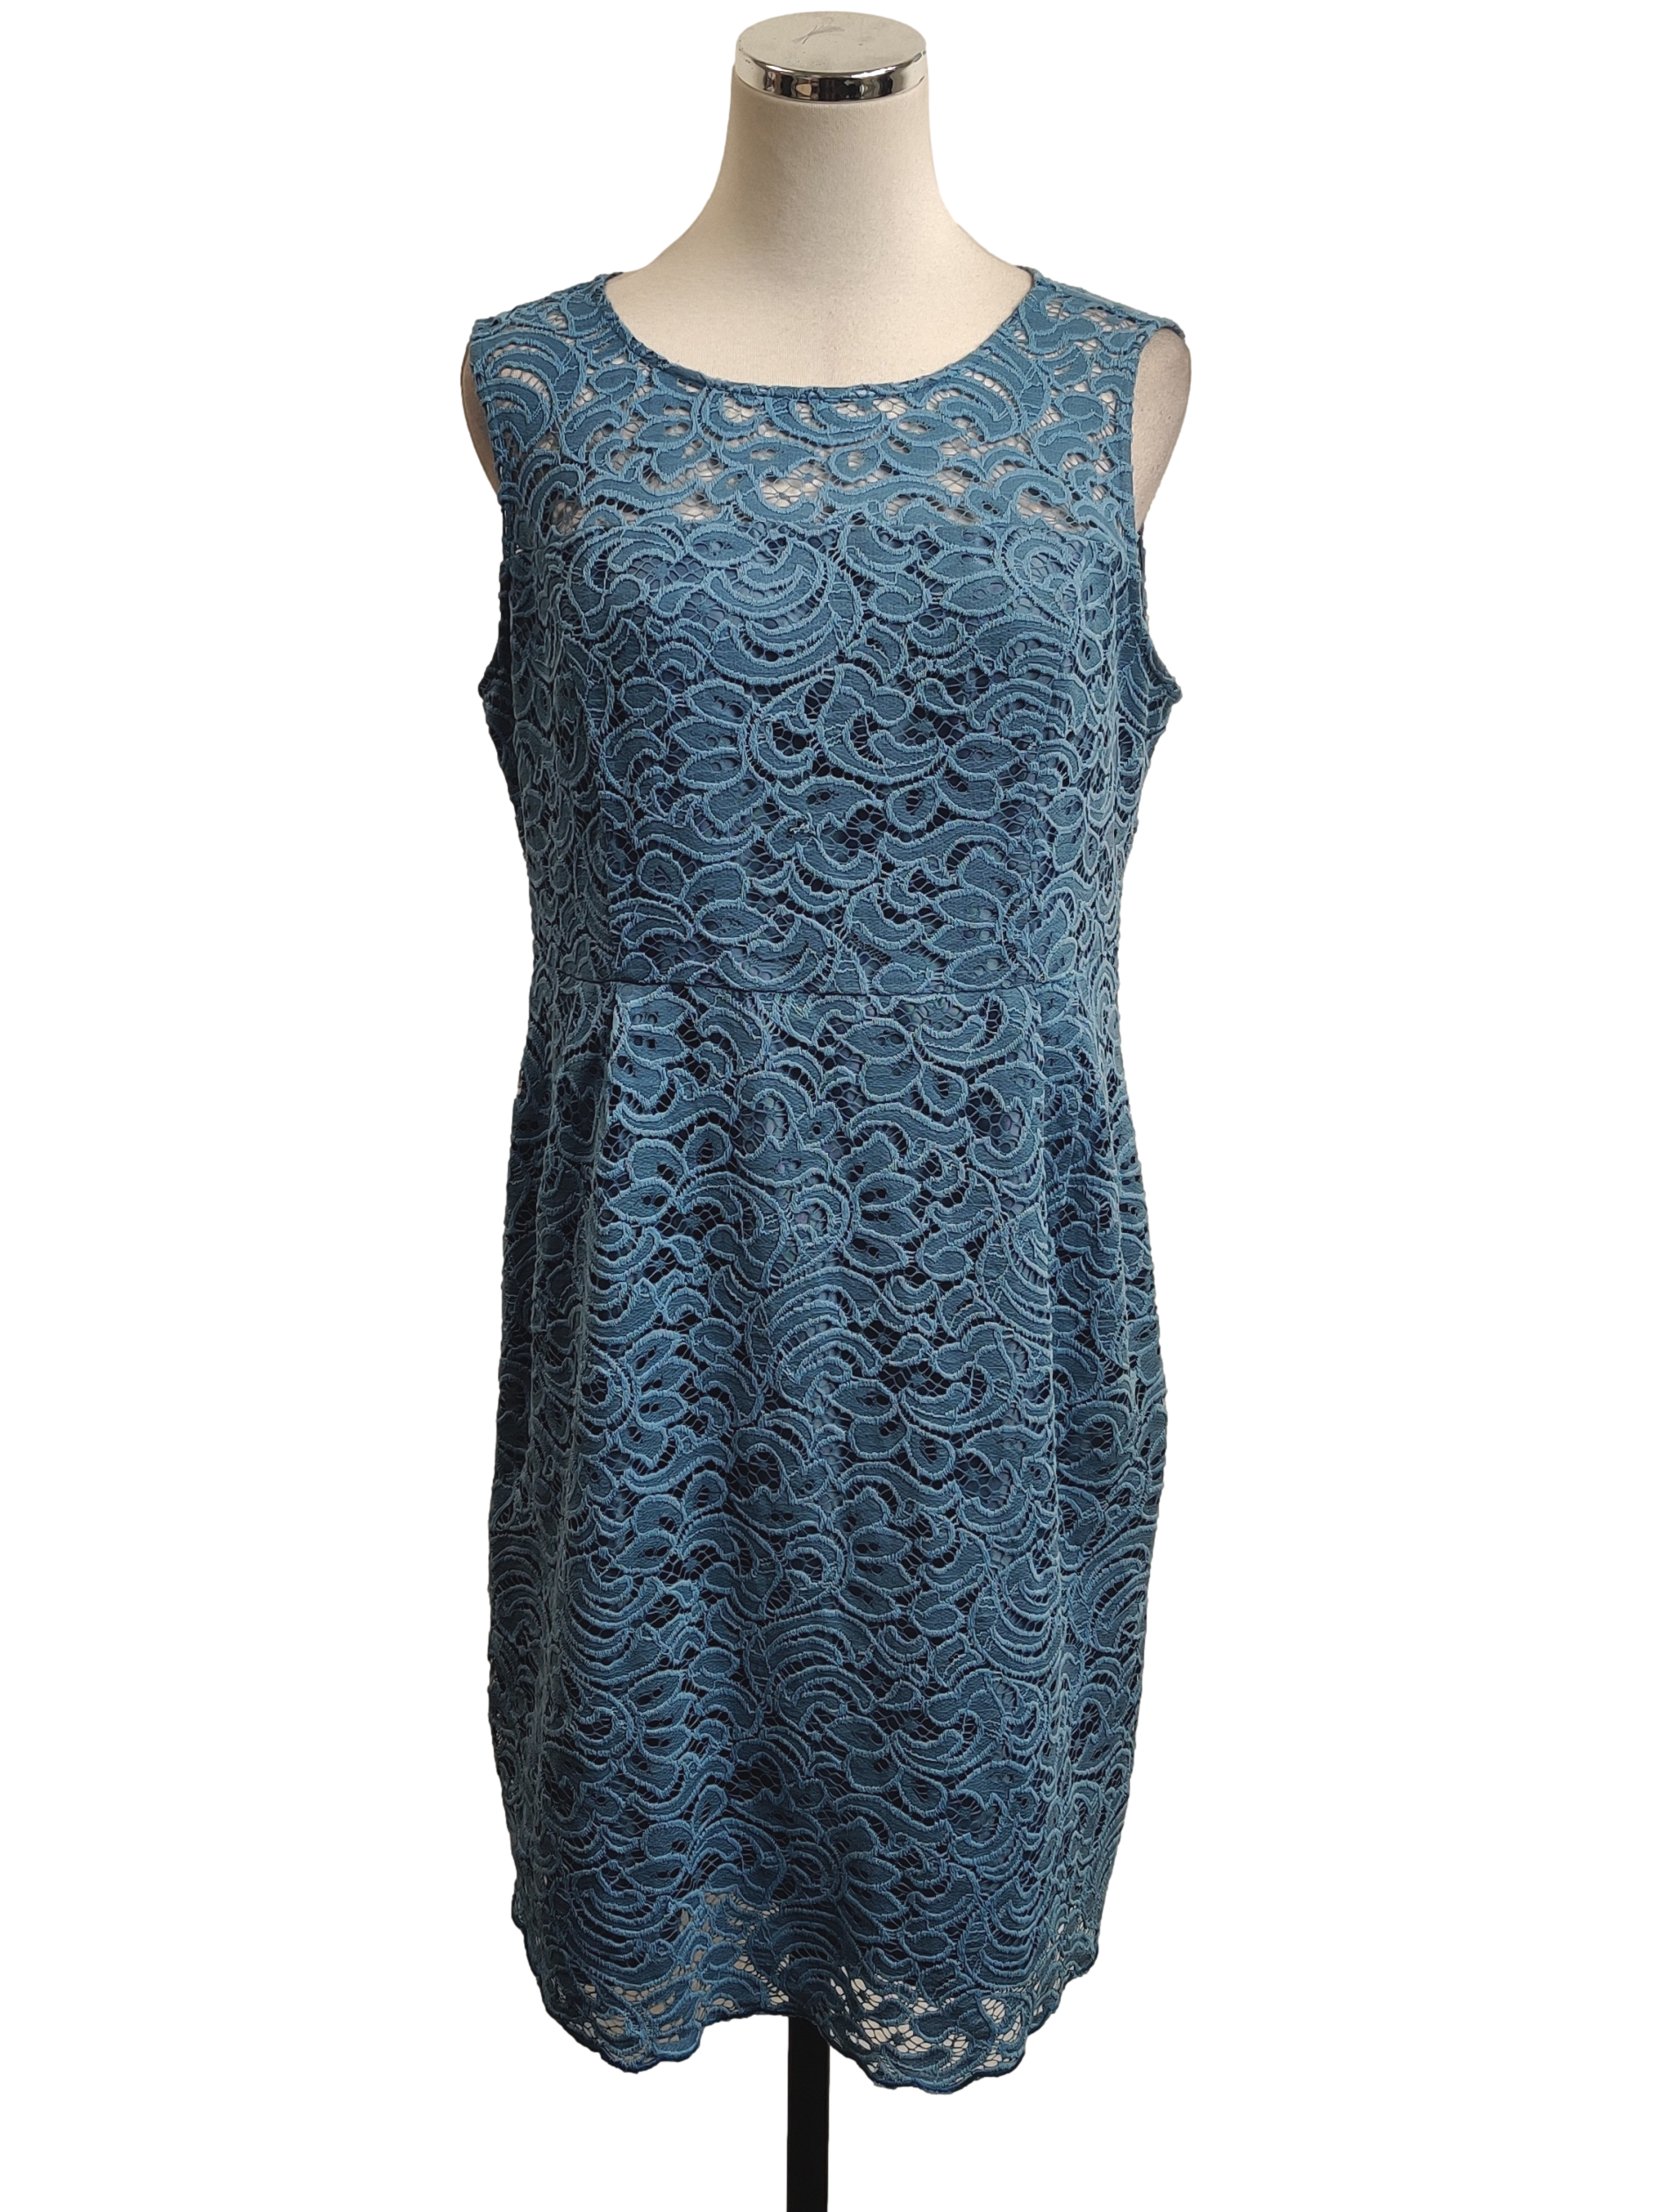 Blue Lace Patterned Dress